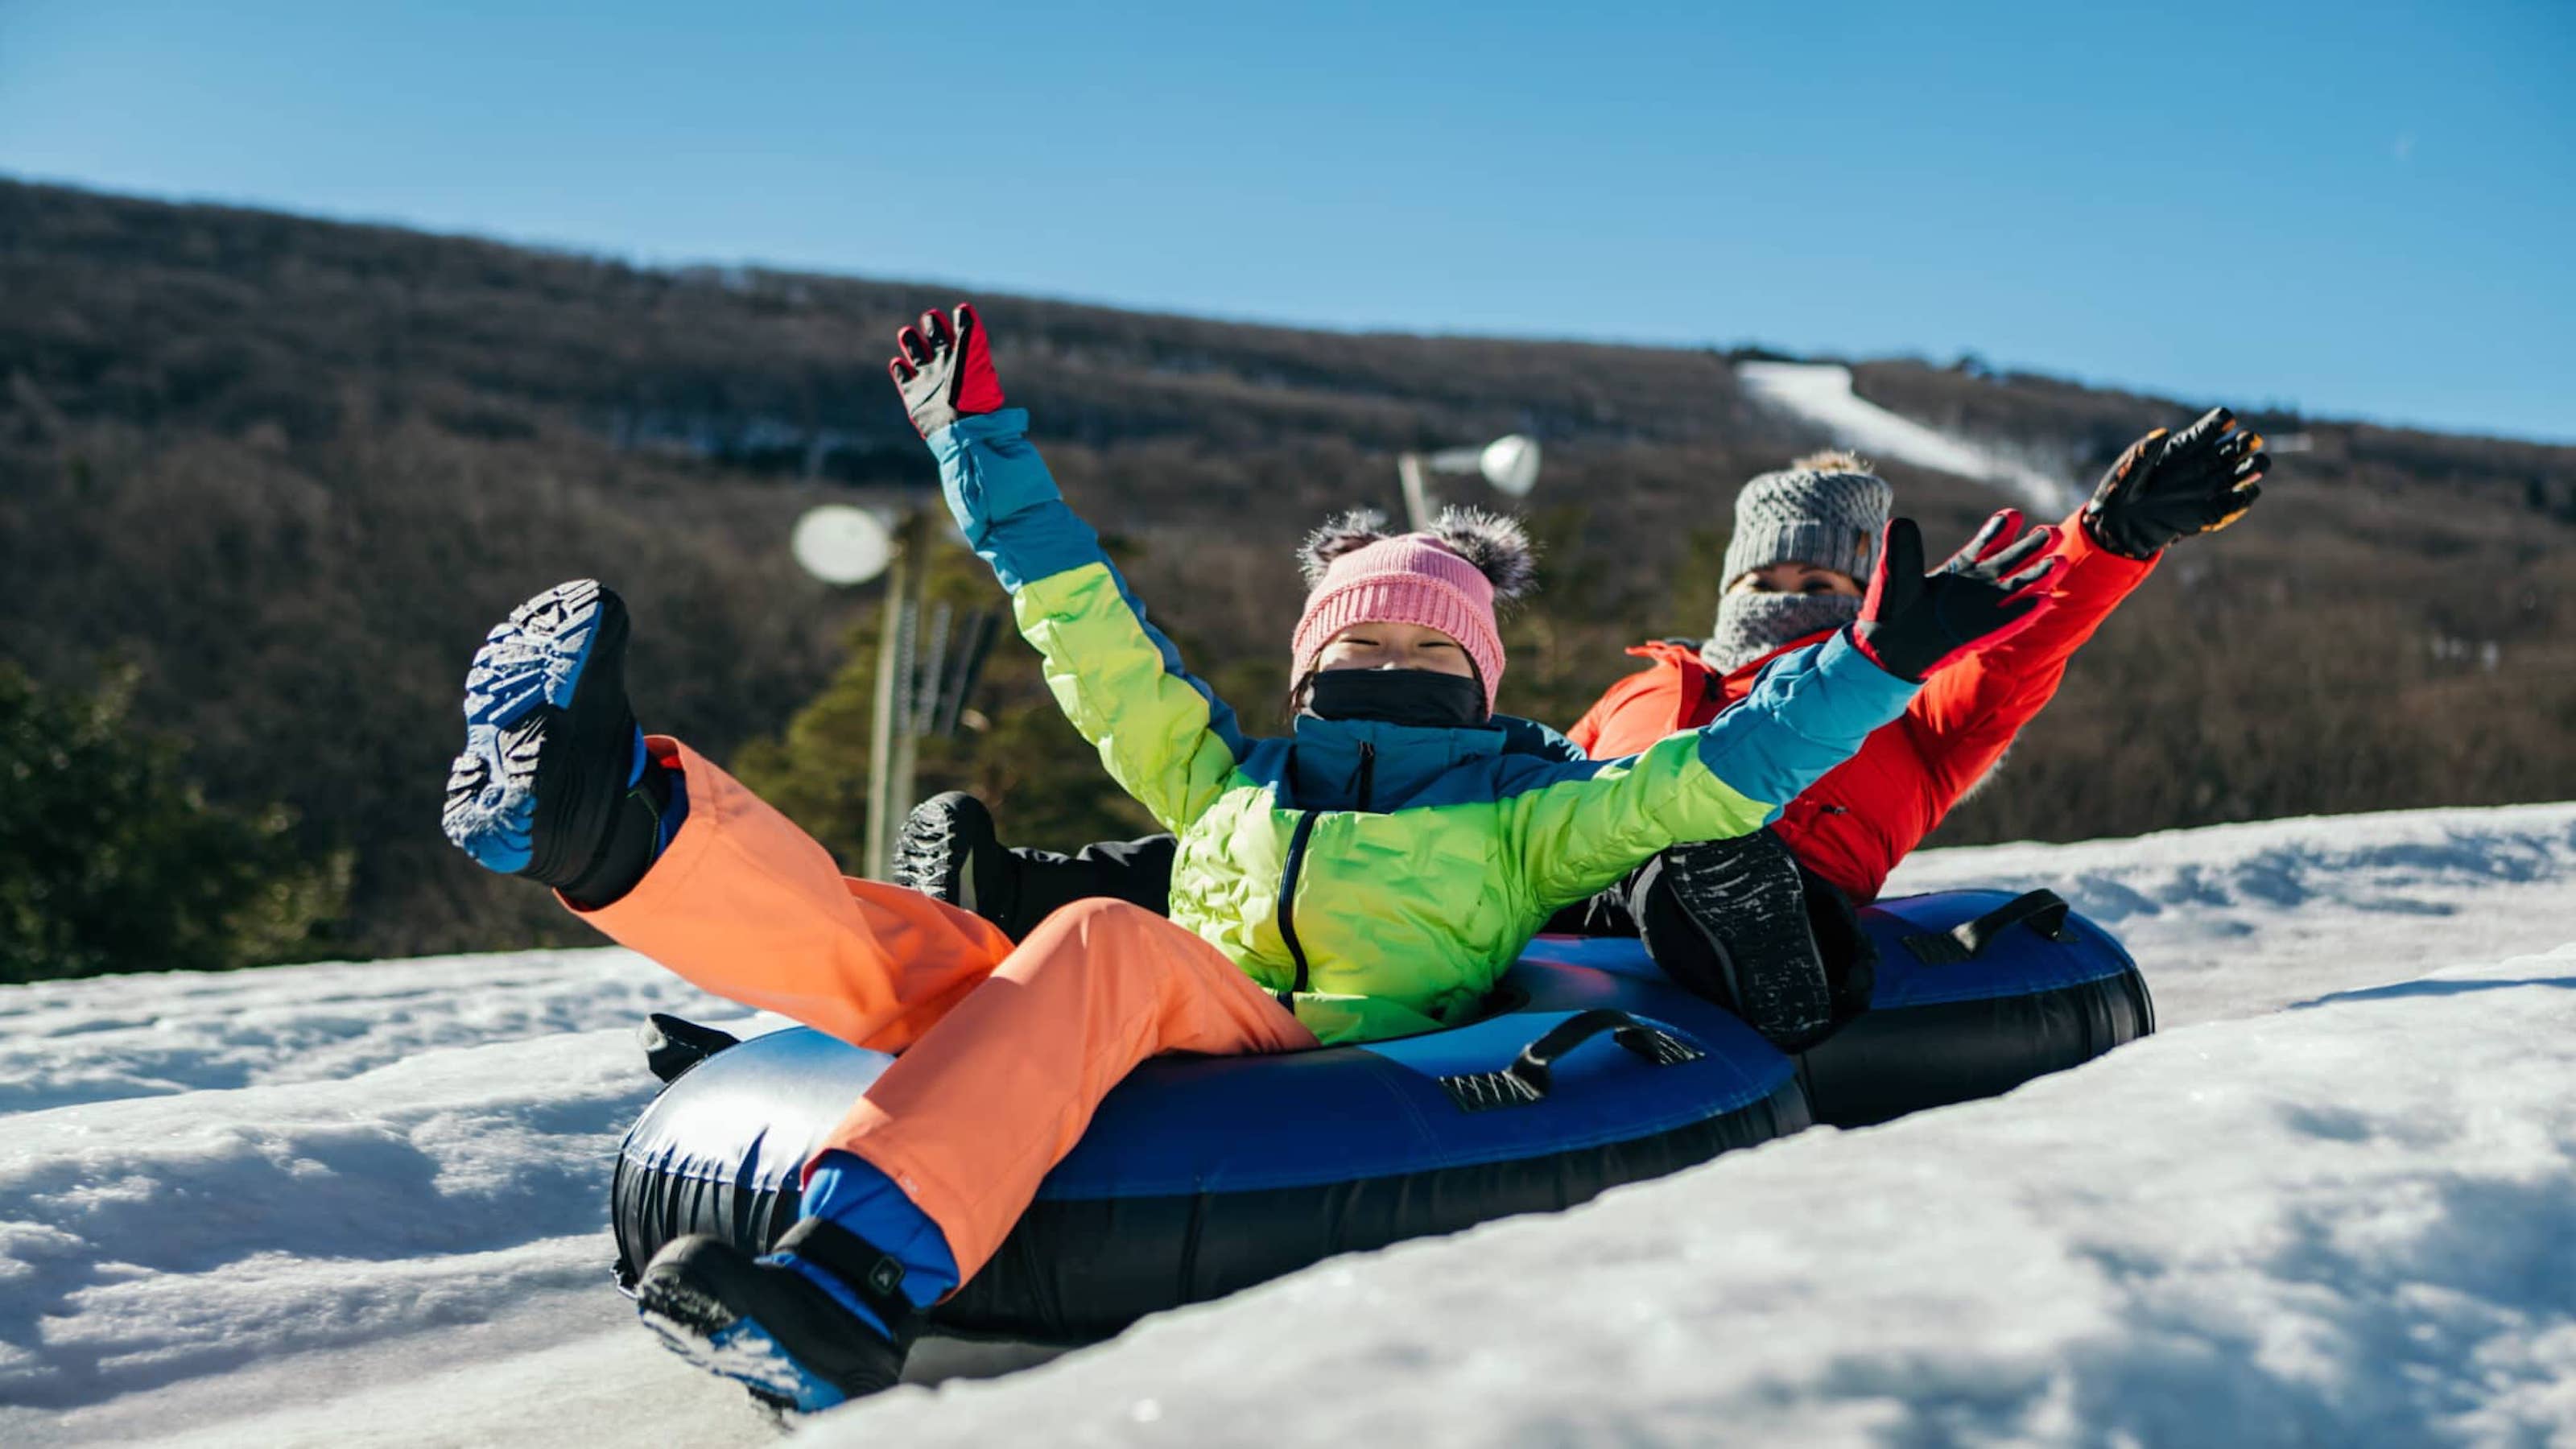 13 Best Family Ski Resorts Fun For All